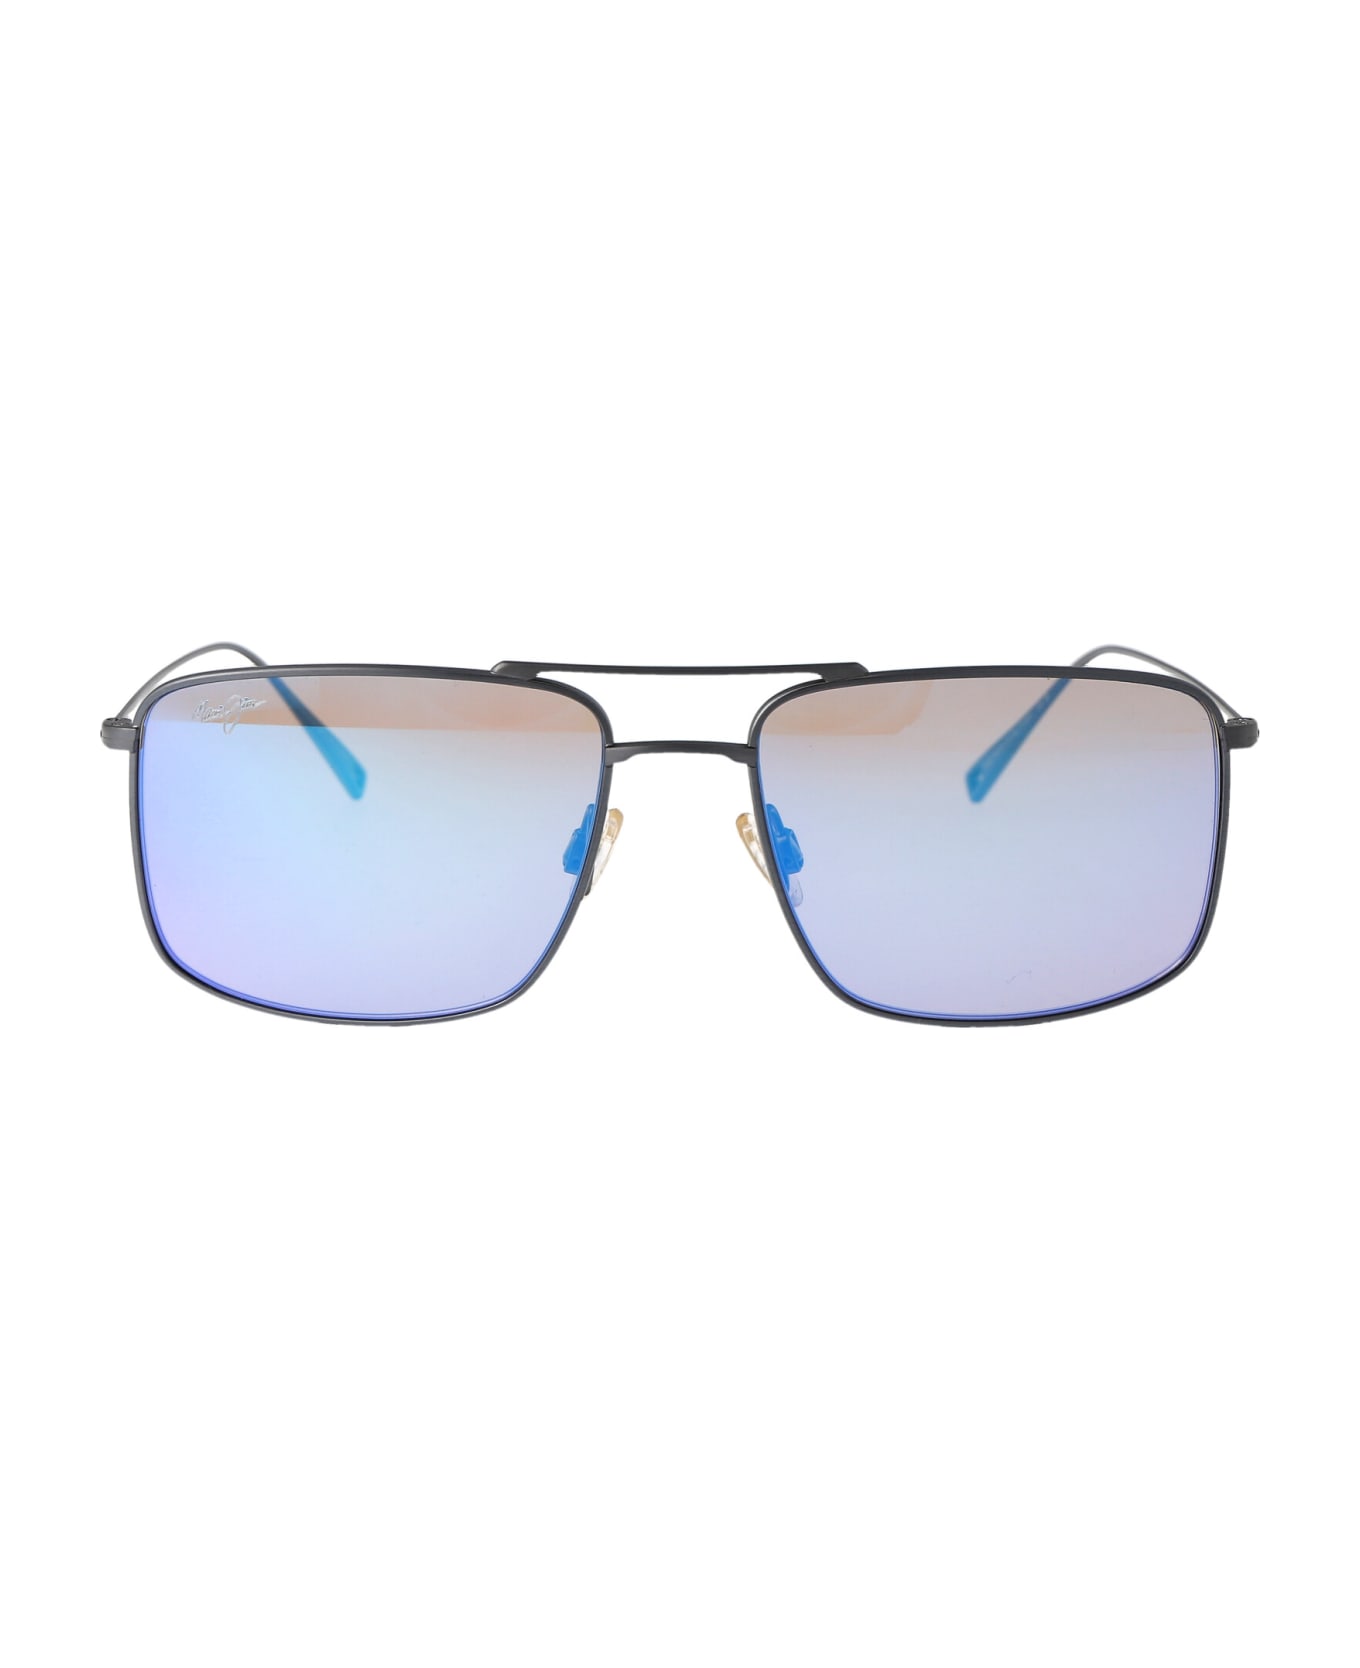 Maui Jim Aeko Sunglasses - 03 BLUE HAWAII DOVE GREY サングラス